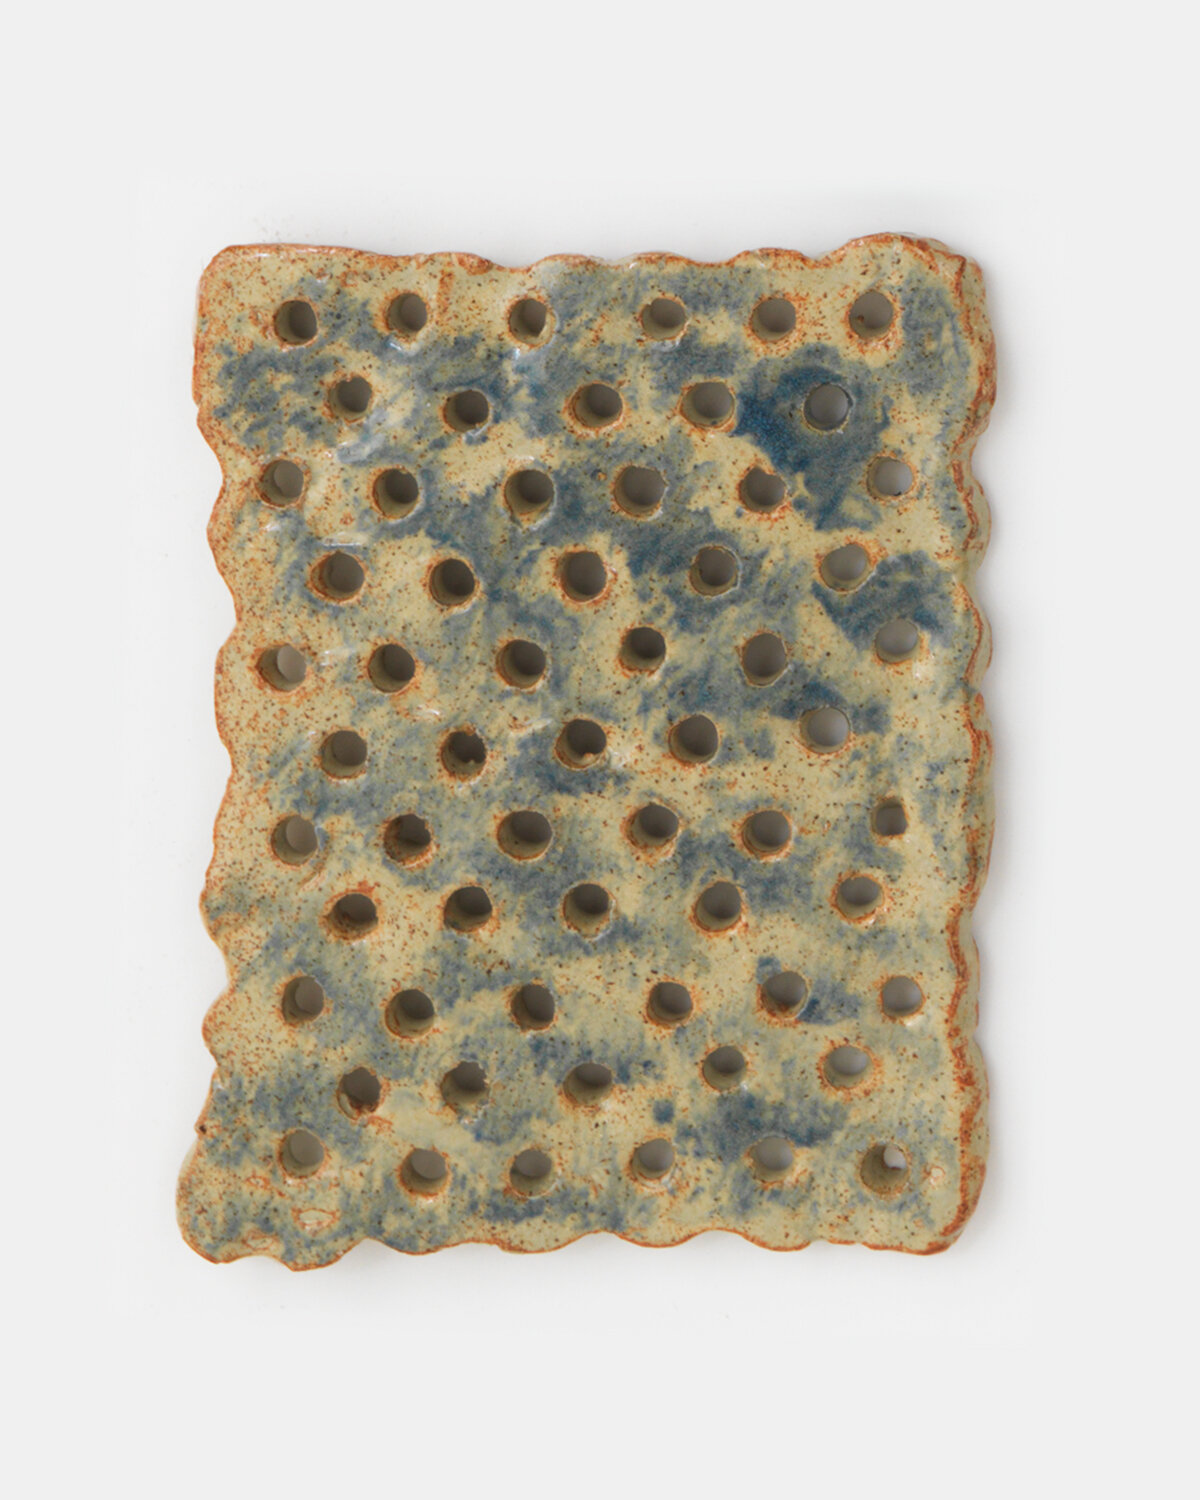   Blue Orange Speckle Cracker with Wavy Edges  Ceramic 4 x 3 inches    